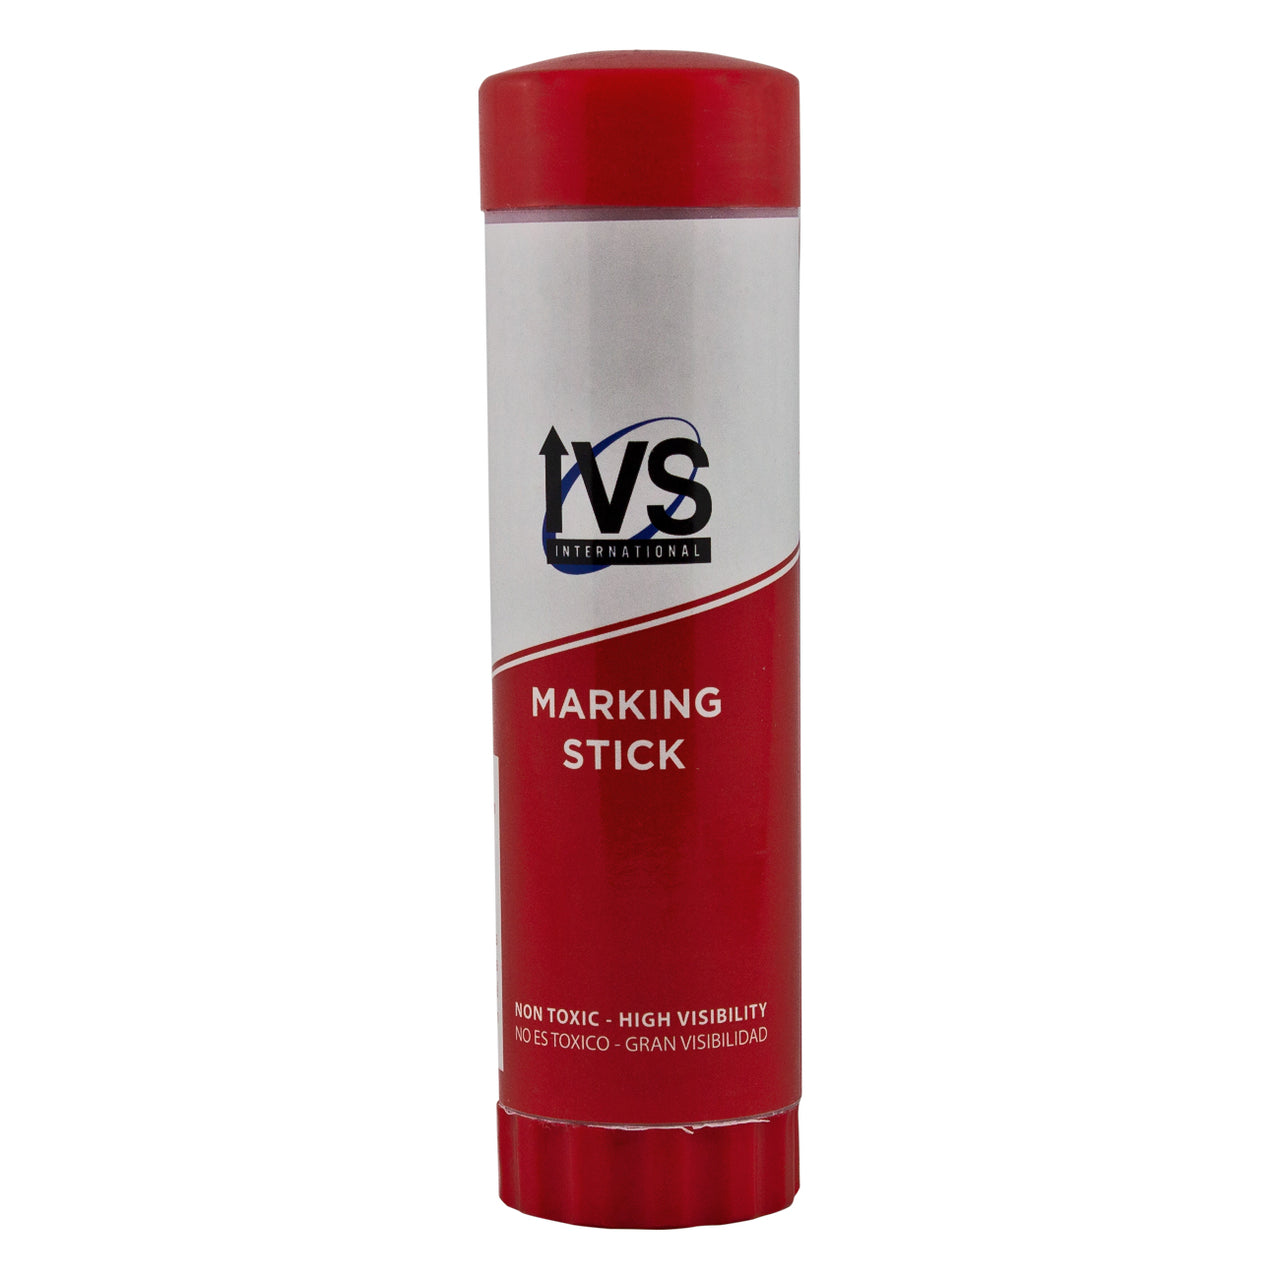 IVS International twist marking stick